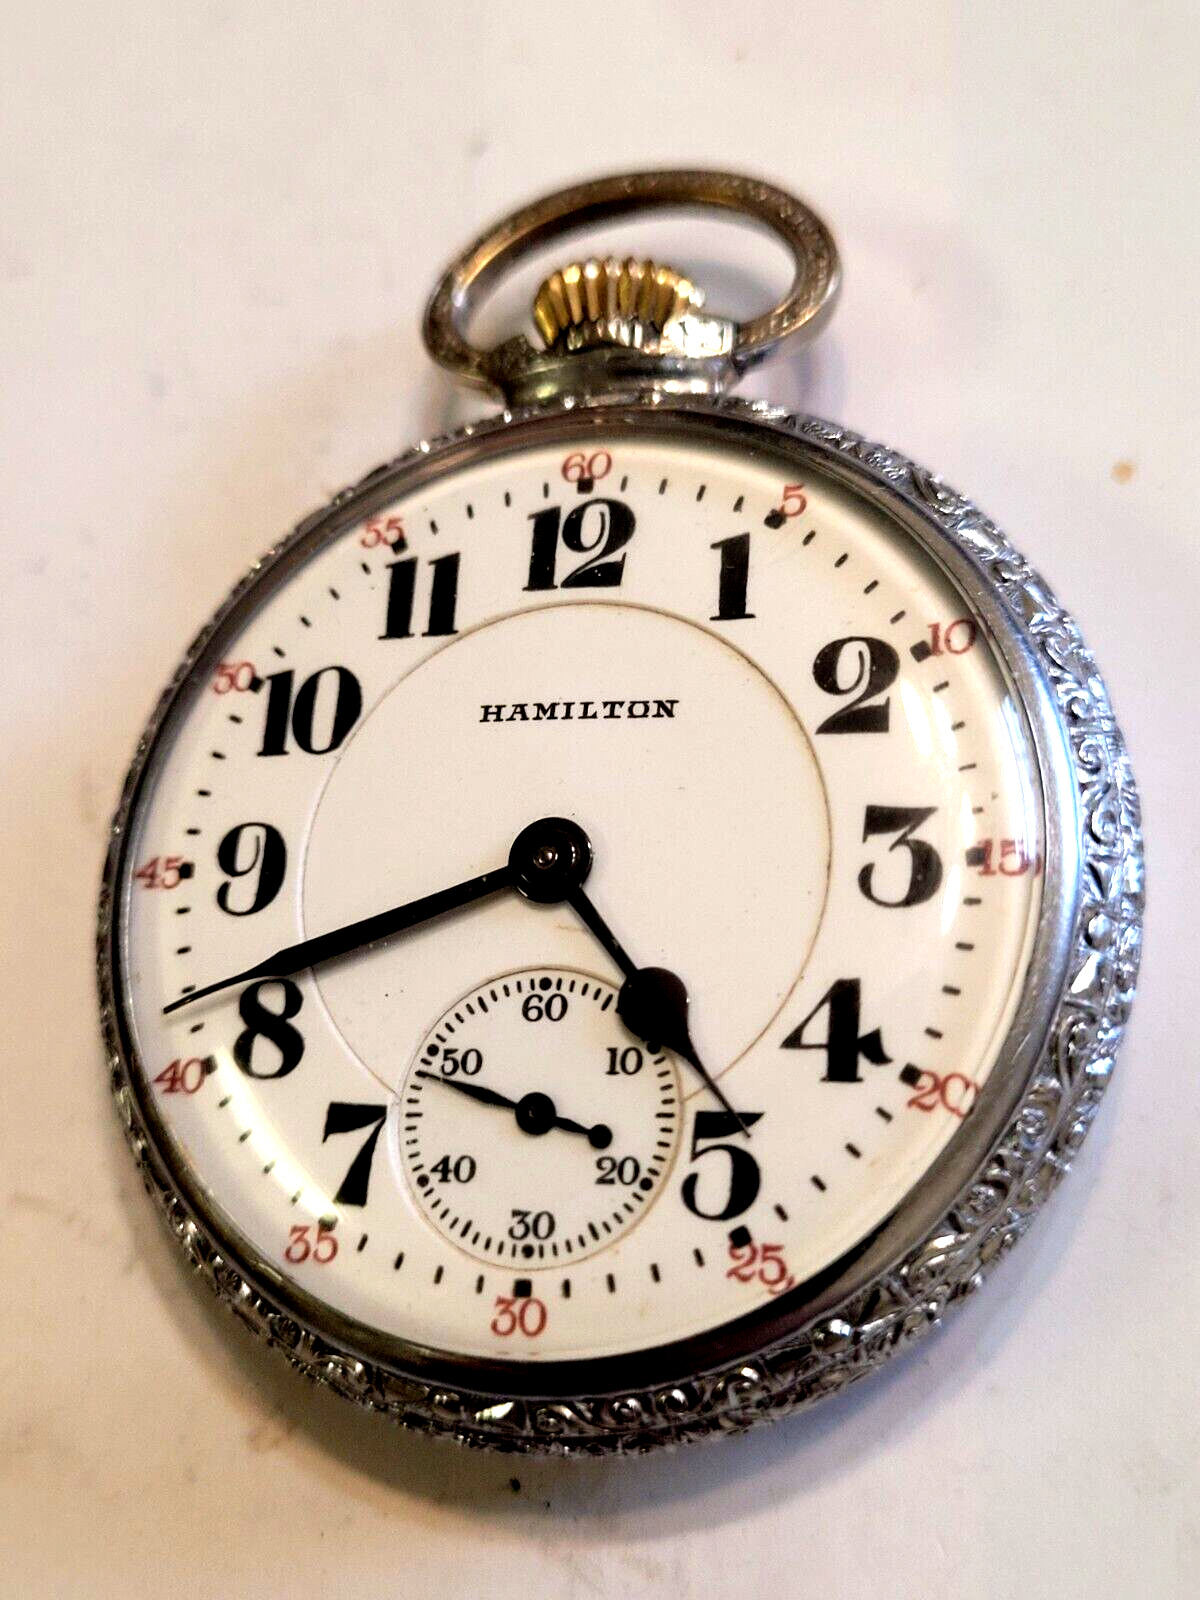 Vintage 1927 Hamilton 992 Pocket Watch - 21 Jewels - Size 16 - Railroad Approved